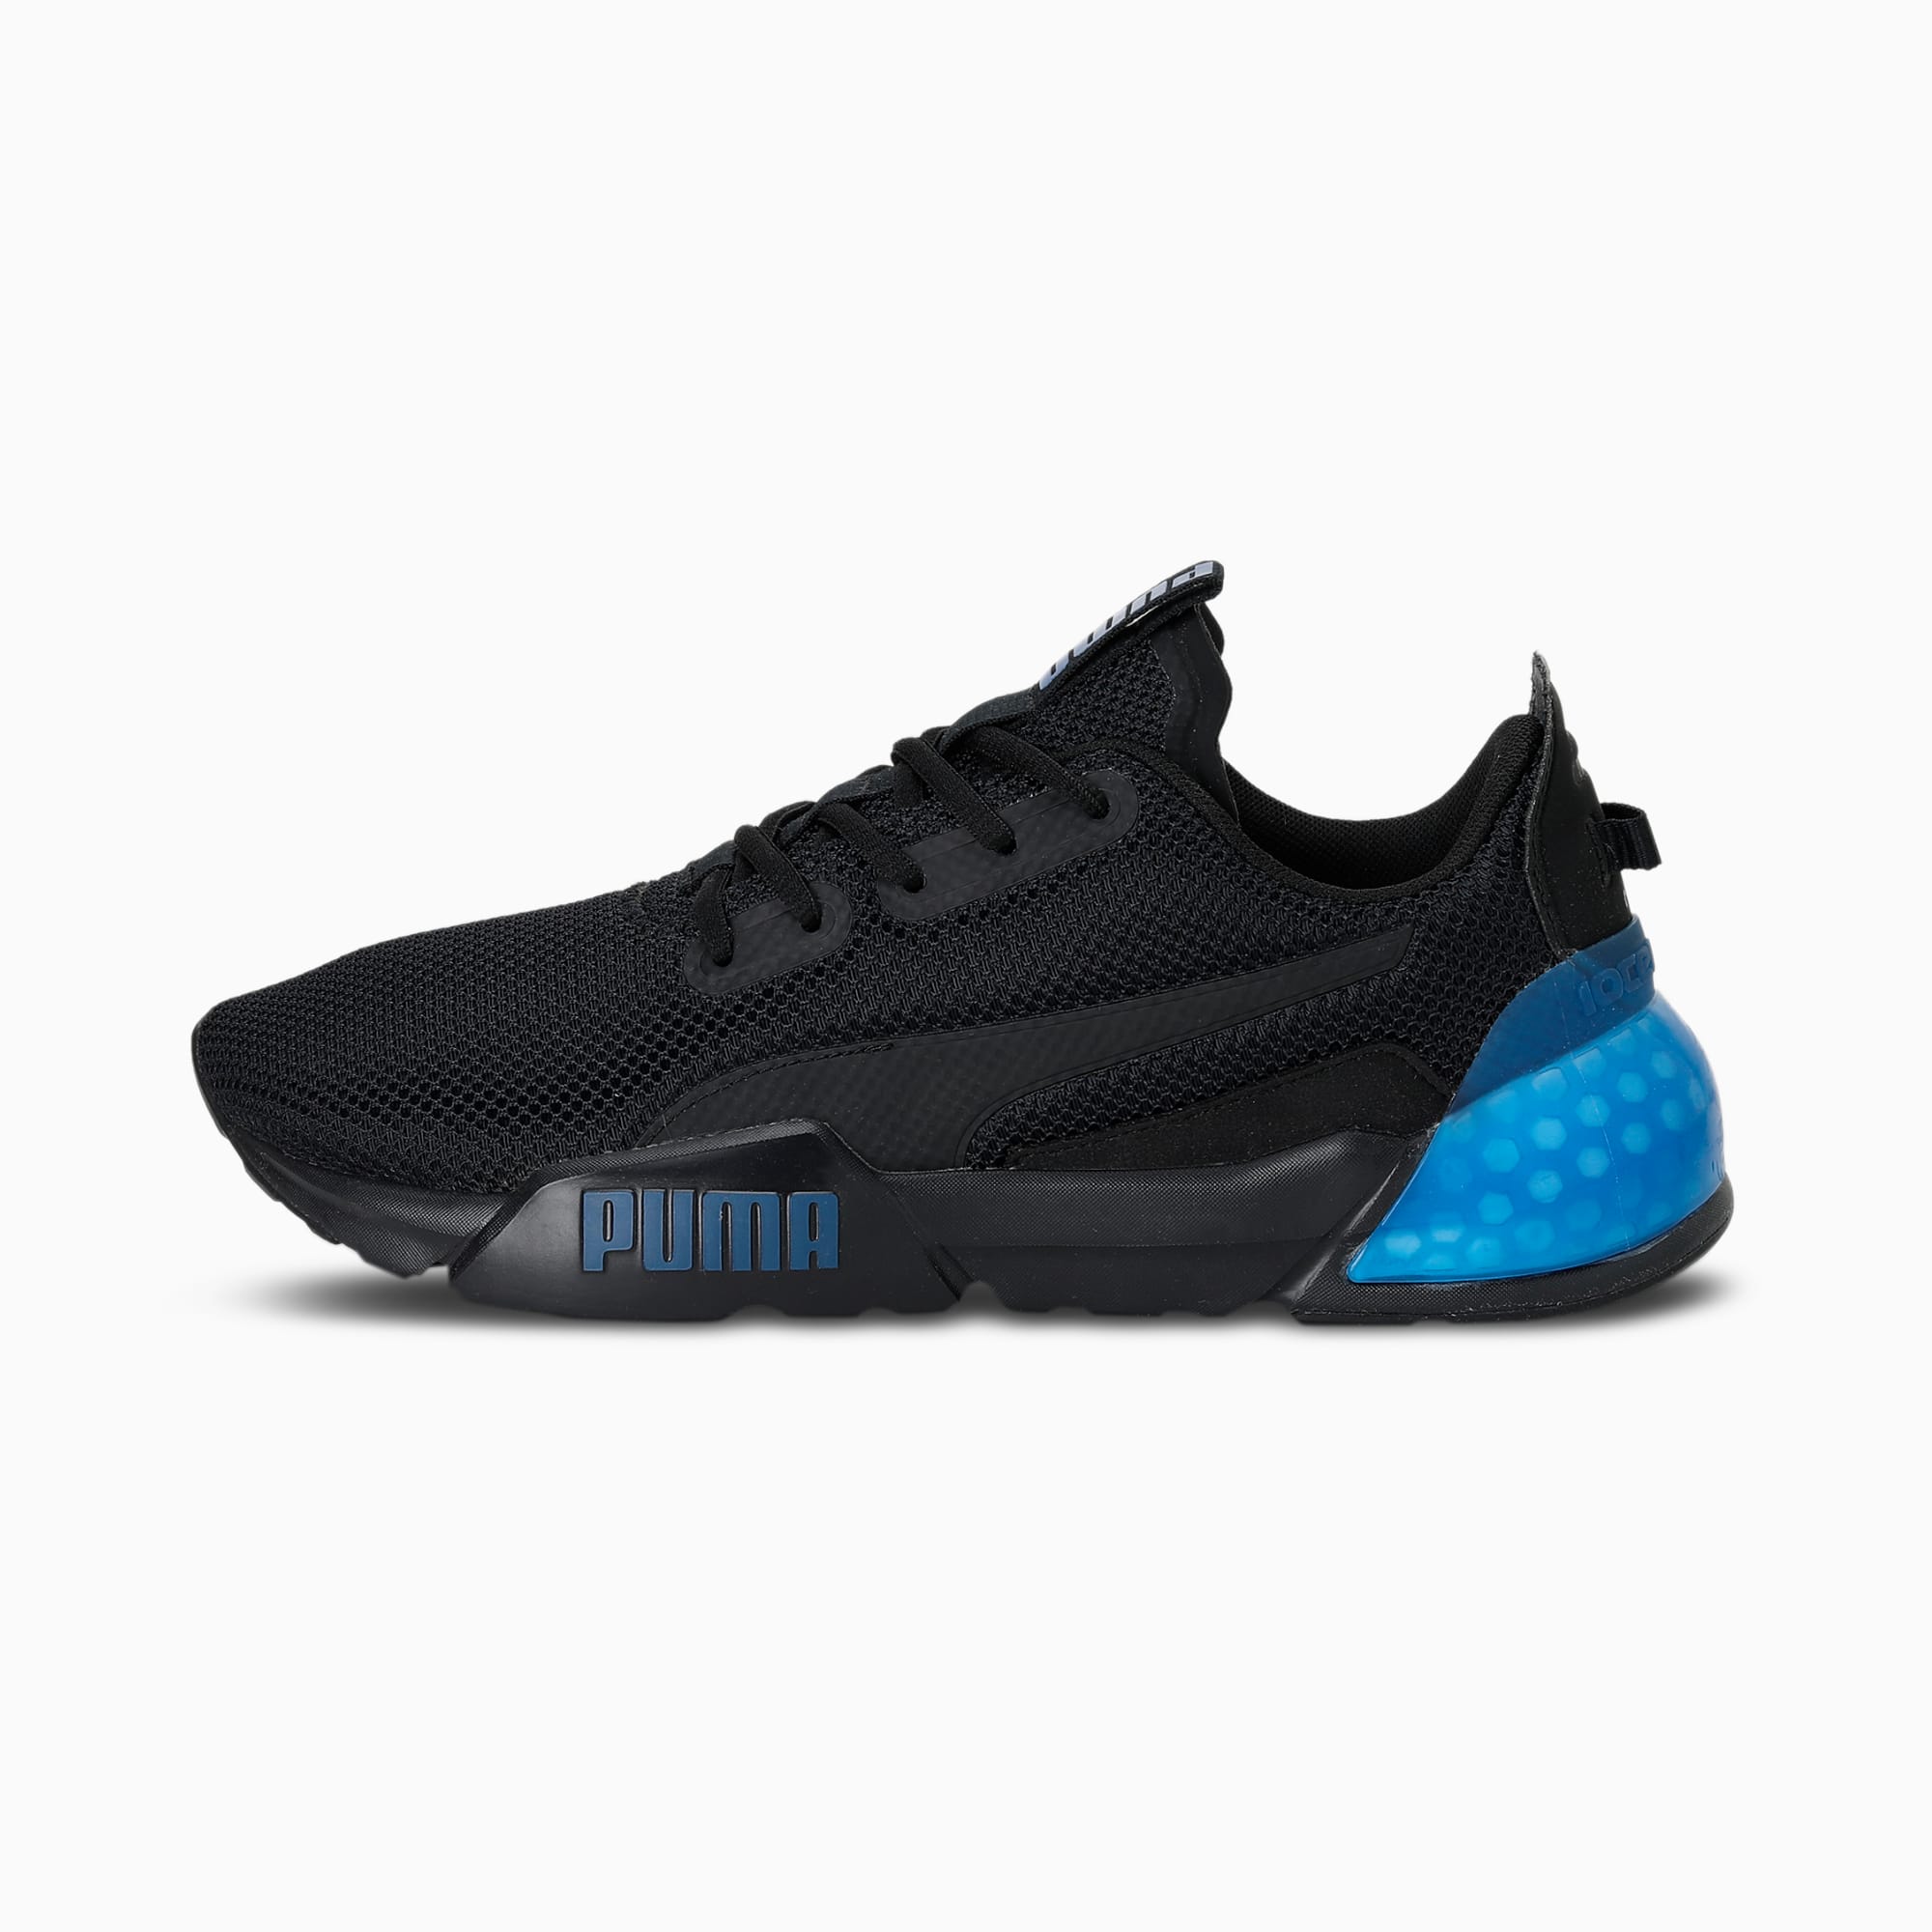 puma shoes black and blue